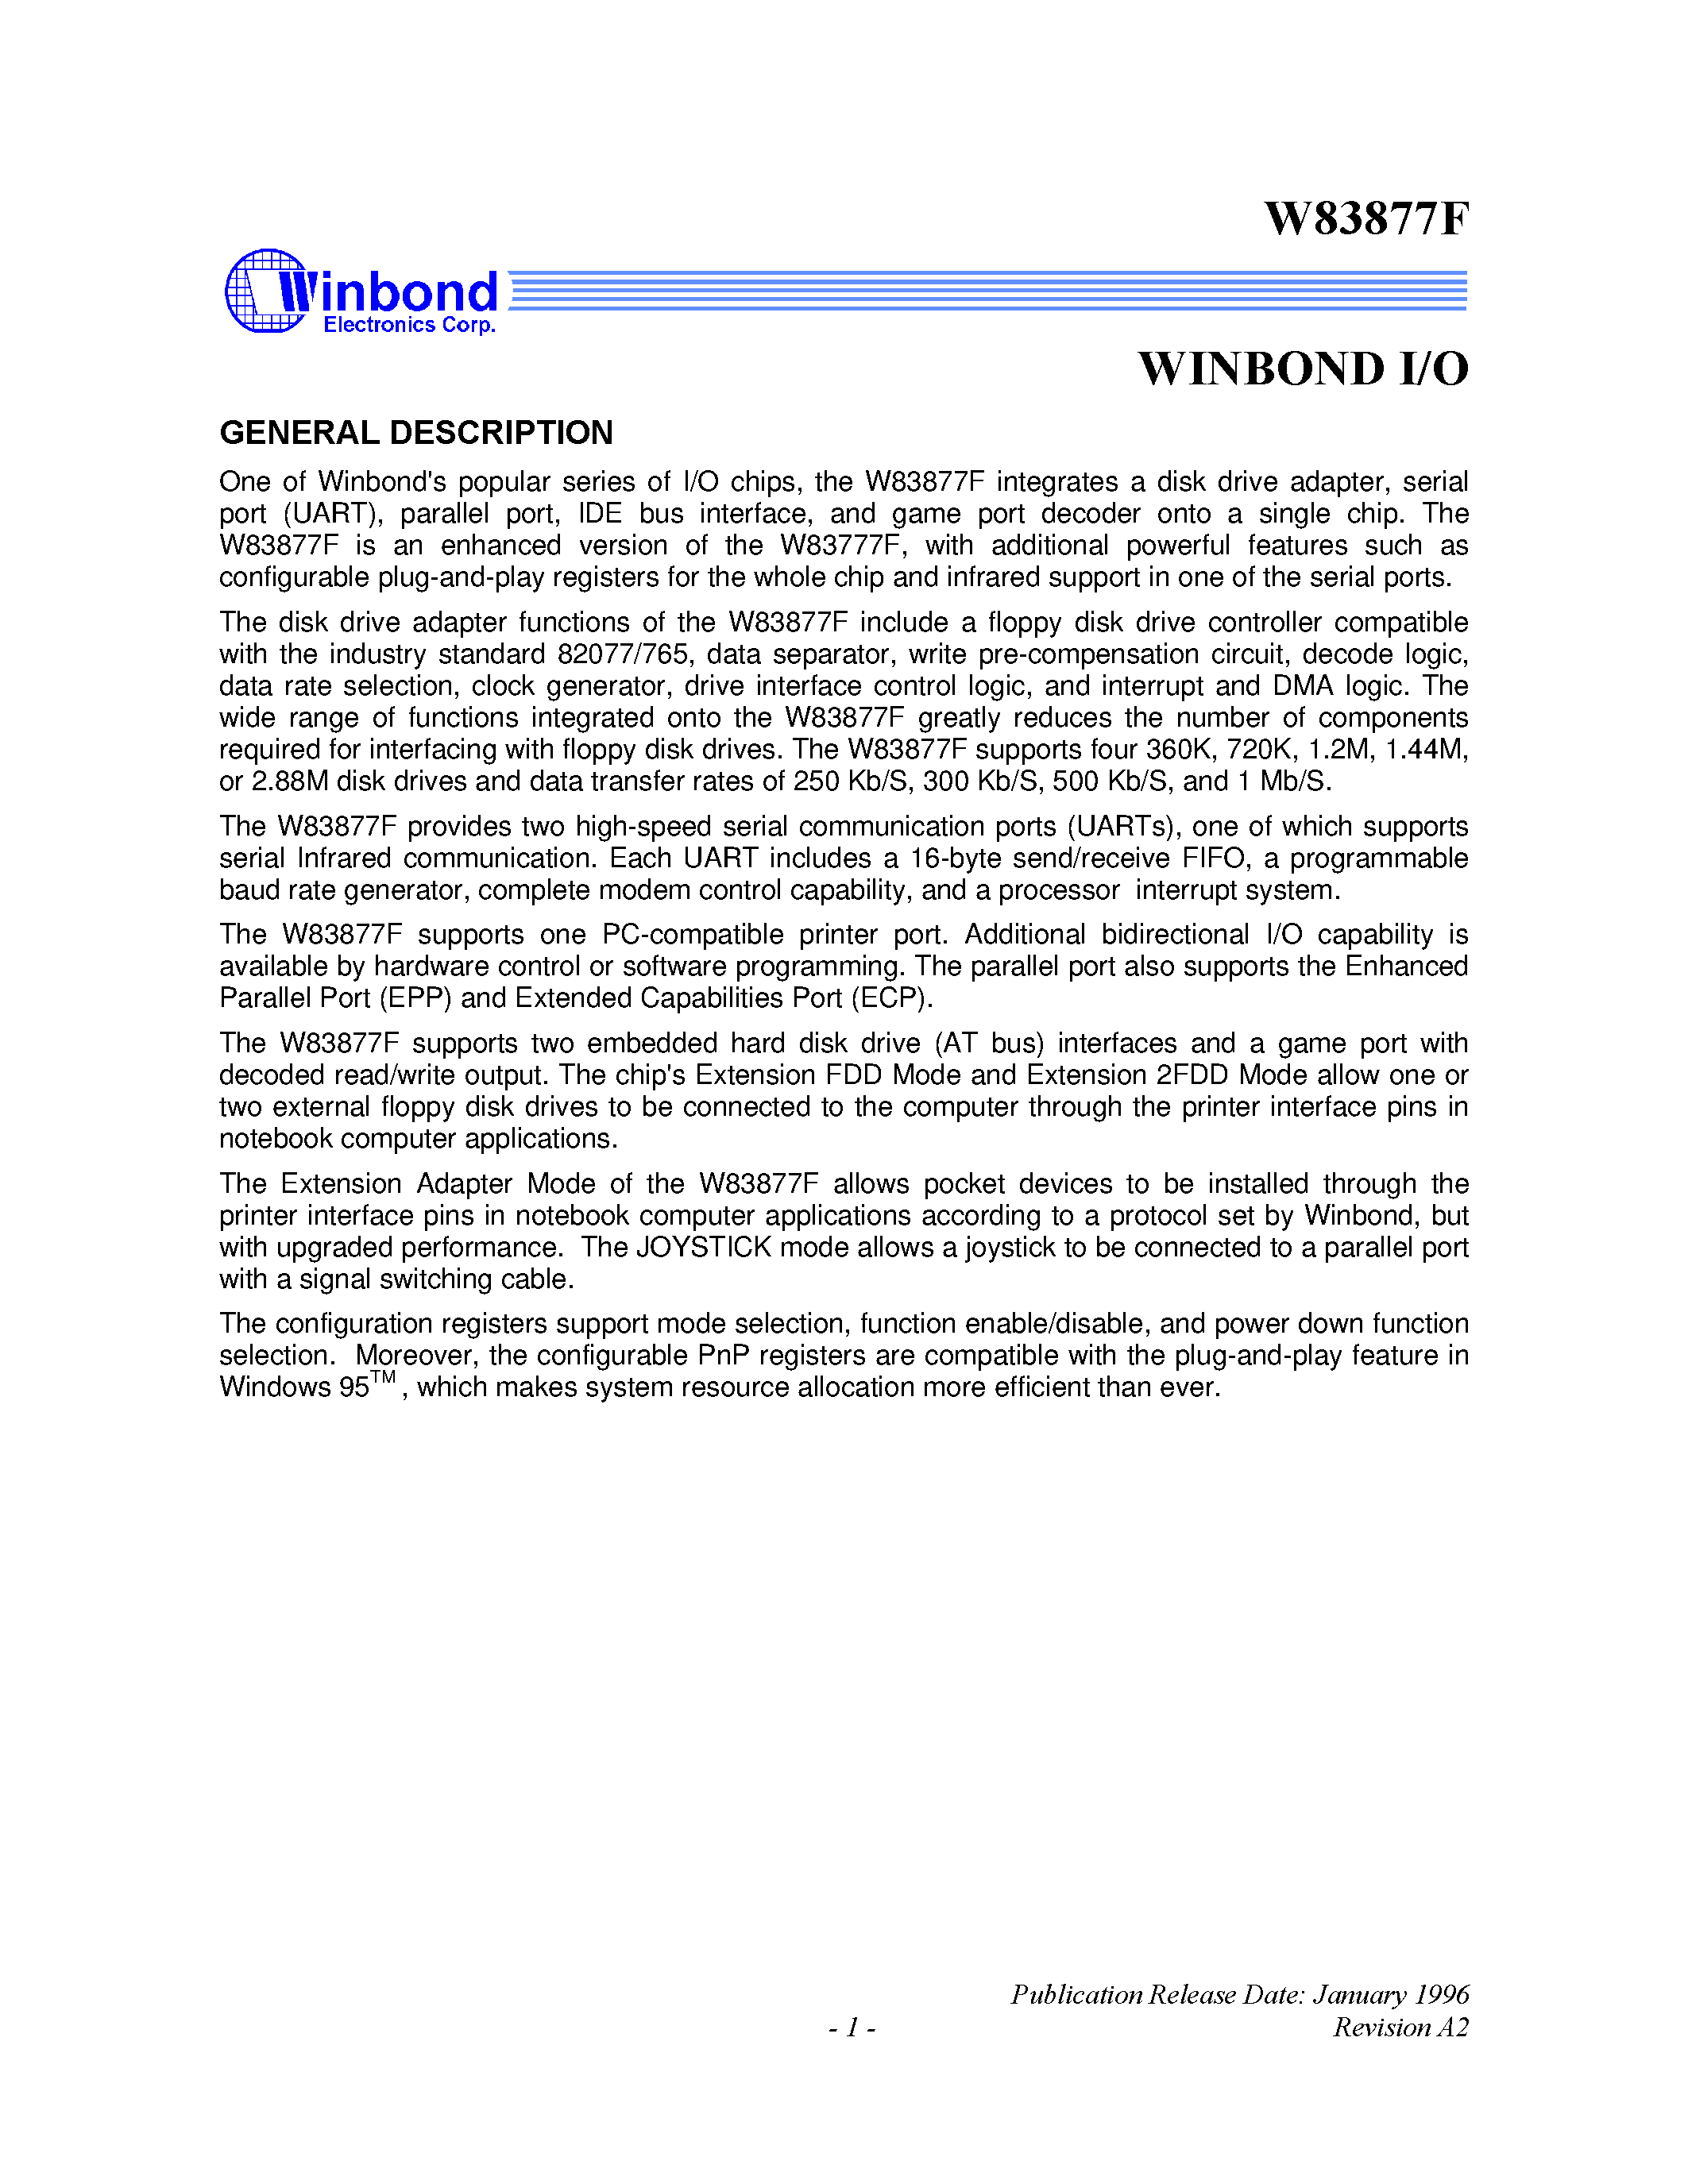 Datasheet W83877 - WINBOND I/O page 1